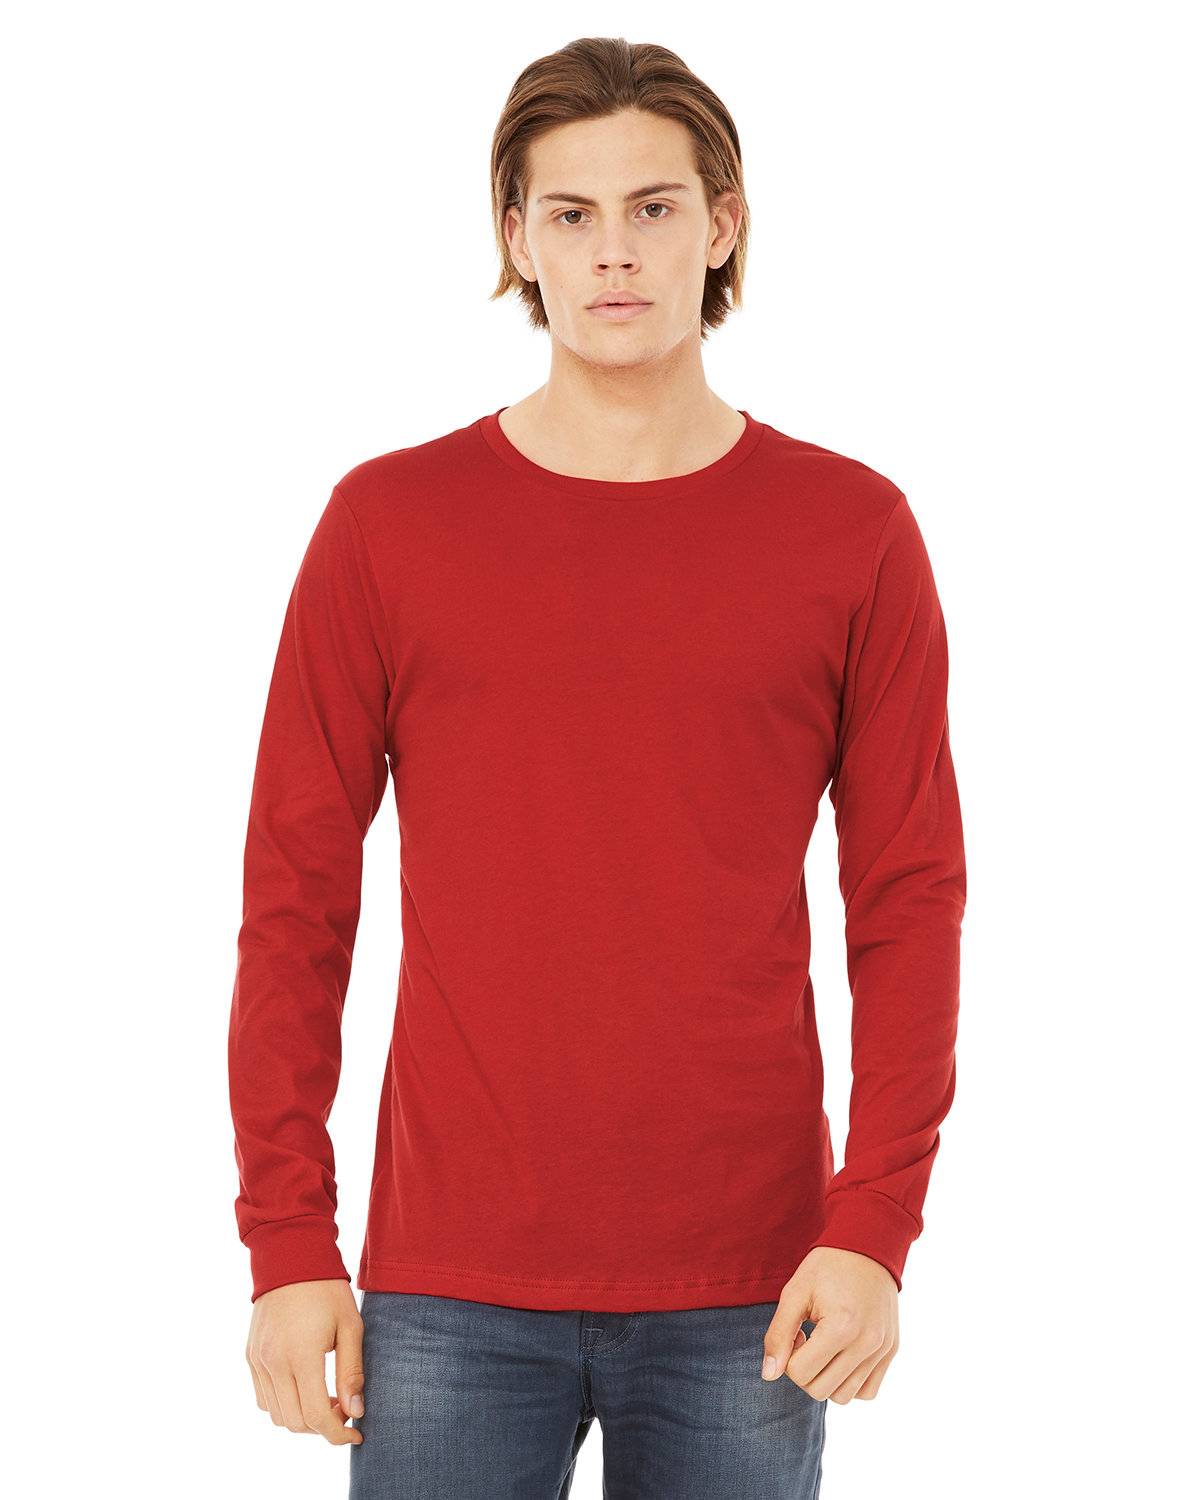 Bella + Canvas Unisex Jersey Long-Sleeve T-Shirt RED 